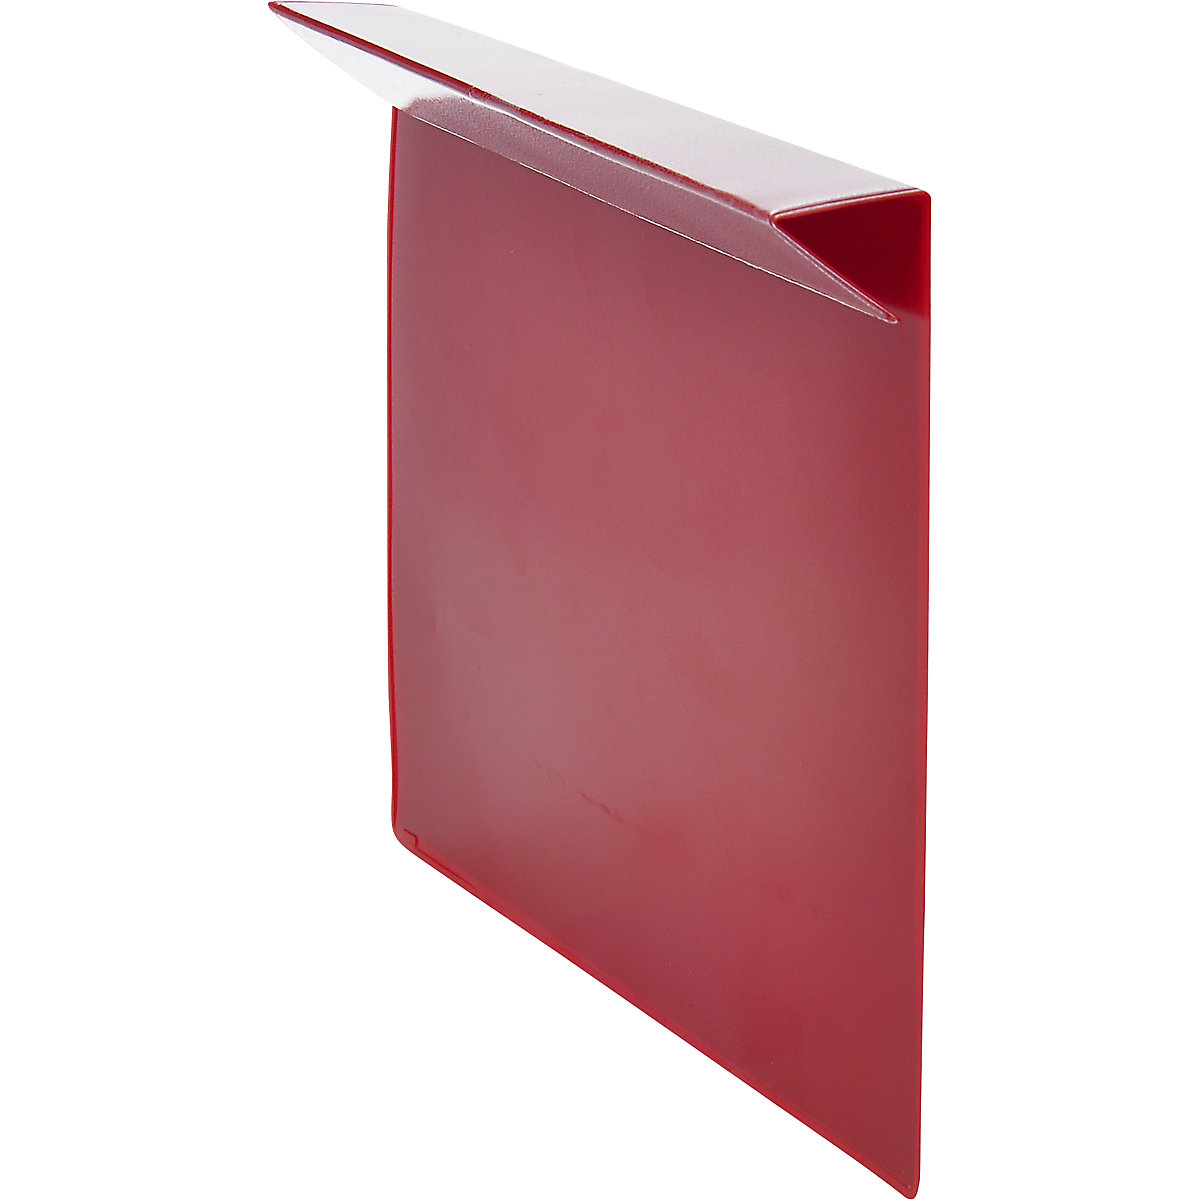 Beschriftungstaschen, VE 100 Stk, für Holzaufsatzrahmen, Papierformat DIN A5, rot-7